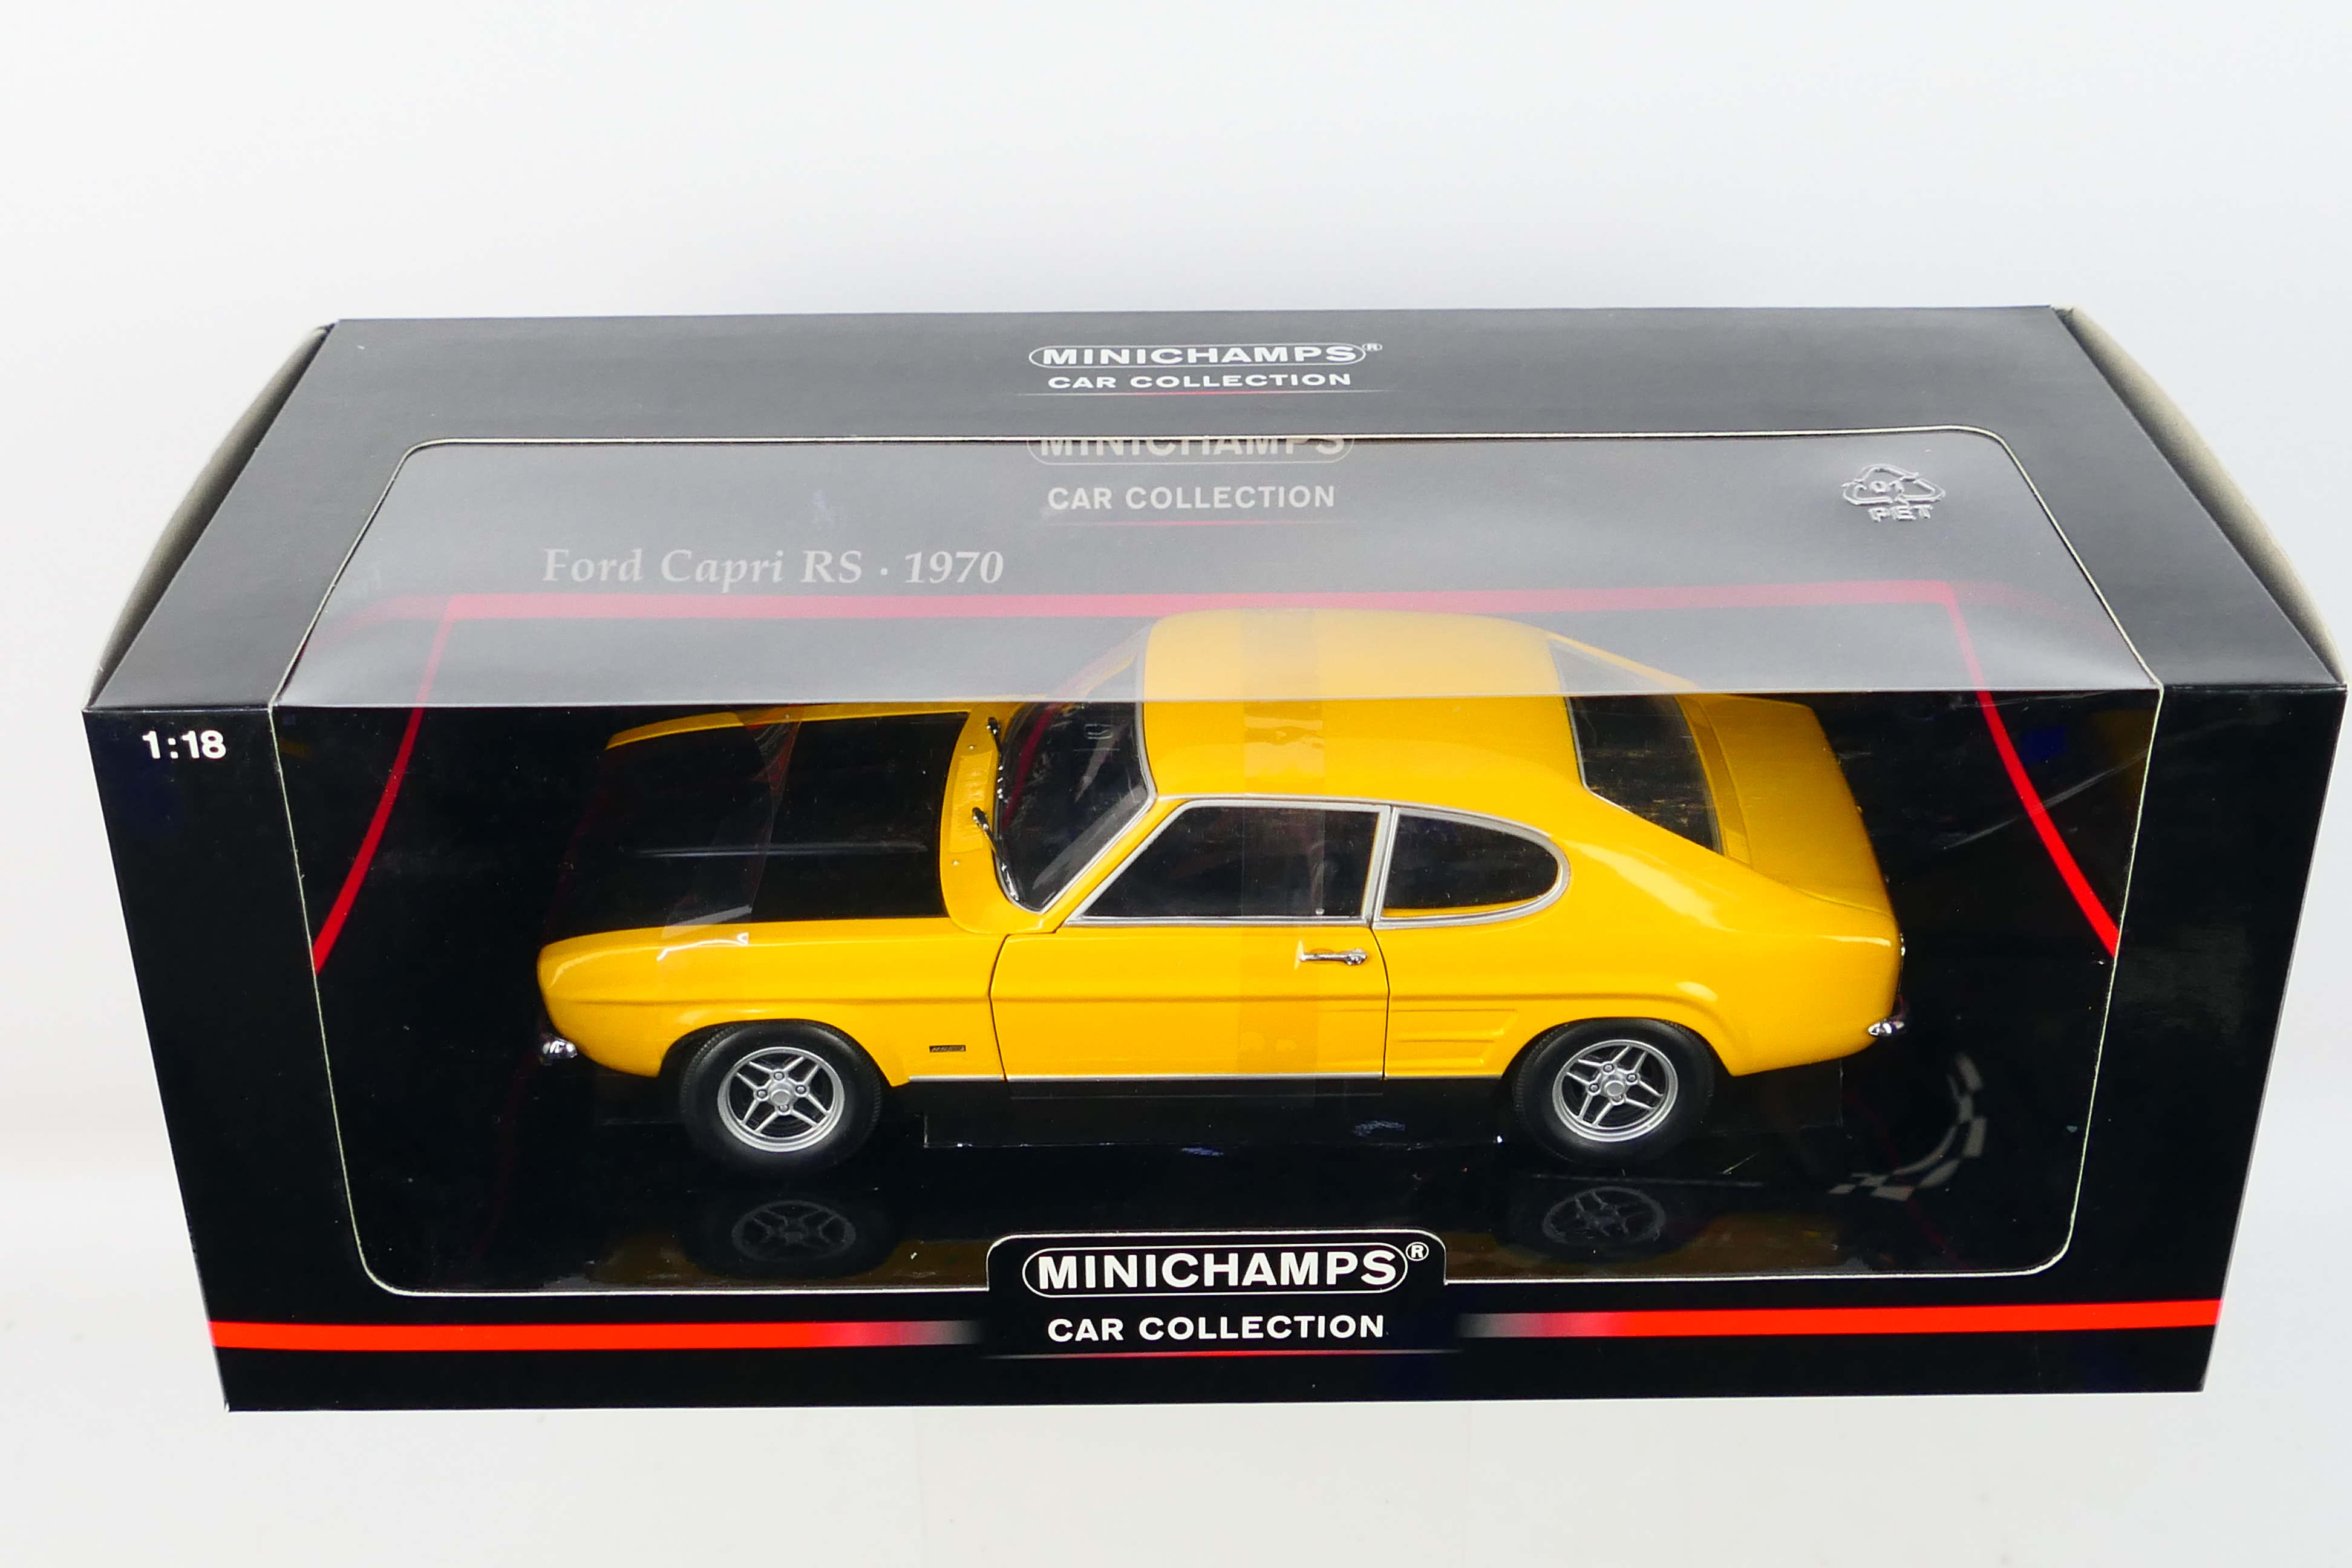 Minichamps - A boxed Minichamps #150089070 1:18 scale 1970 Ford Capri RS Minichamps. - Image 3 of 3